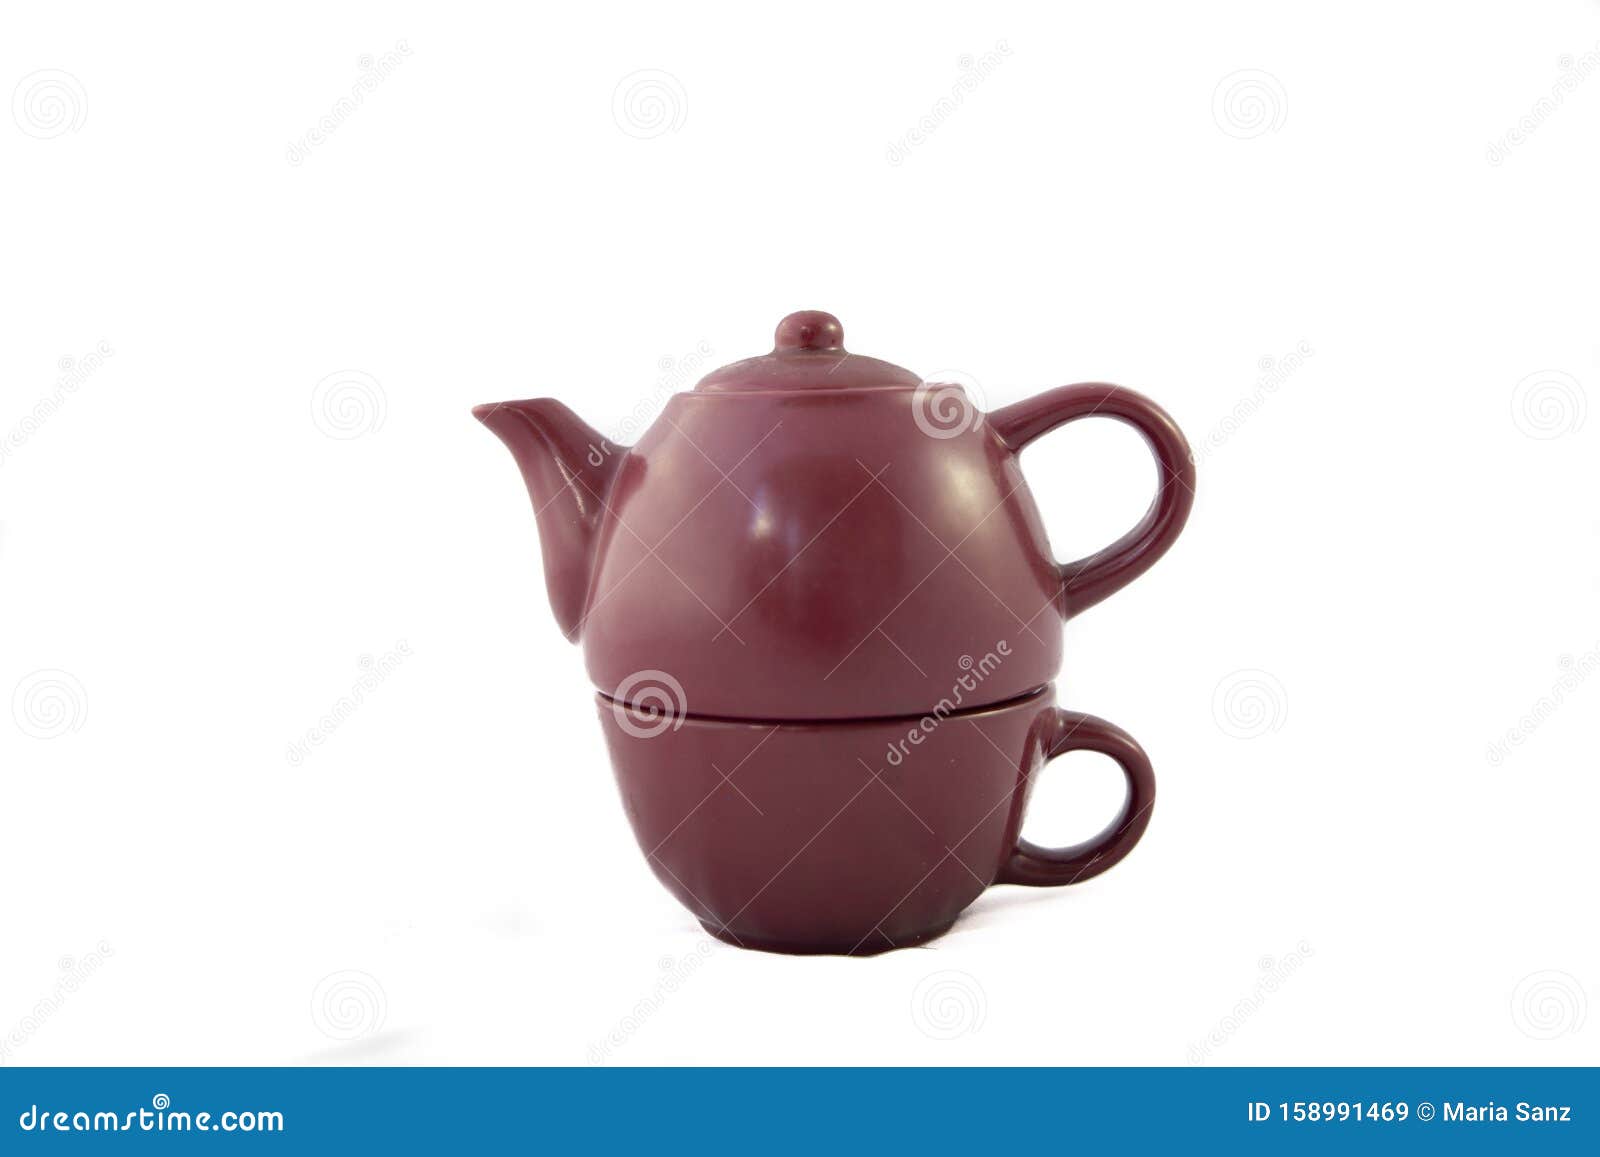 maroon ceramic teapot on white background